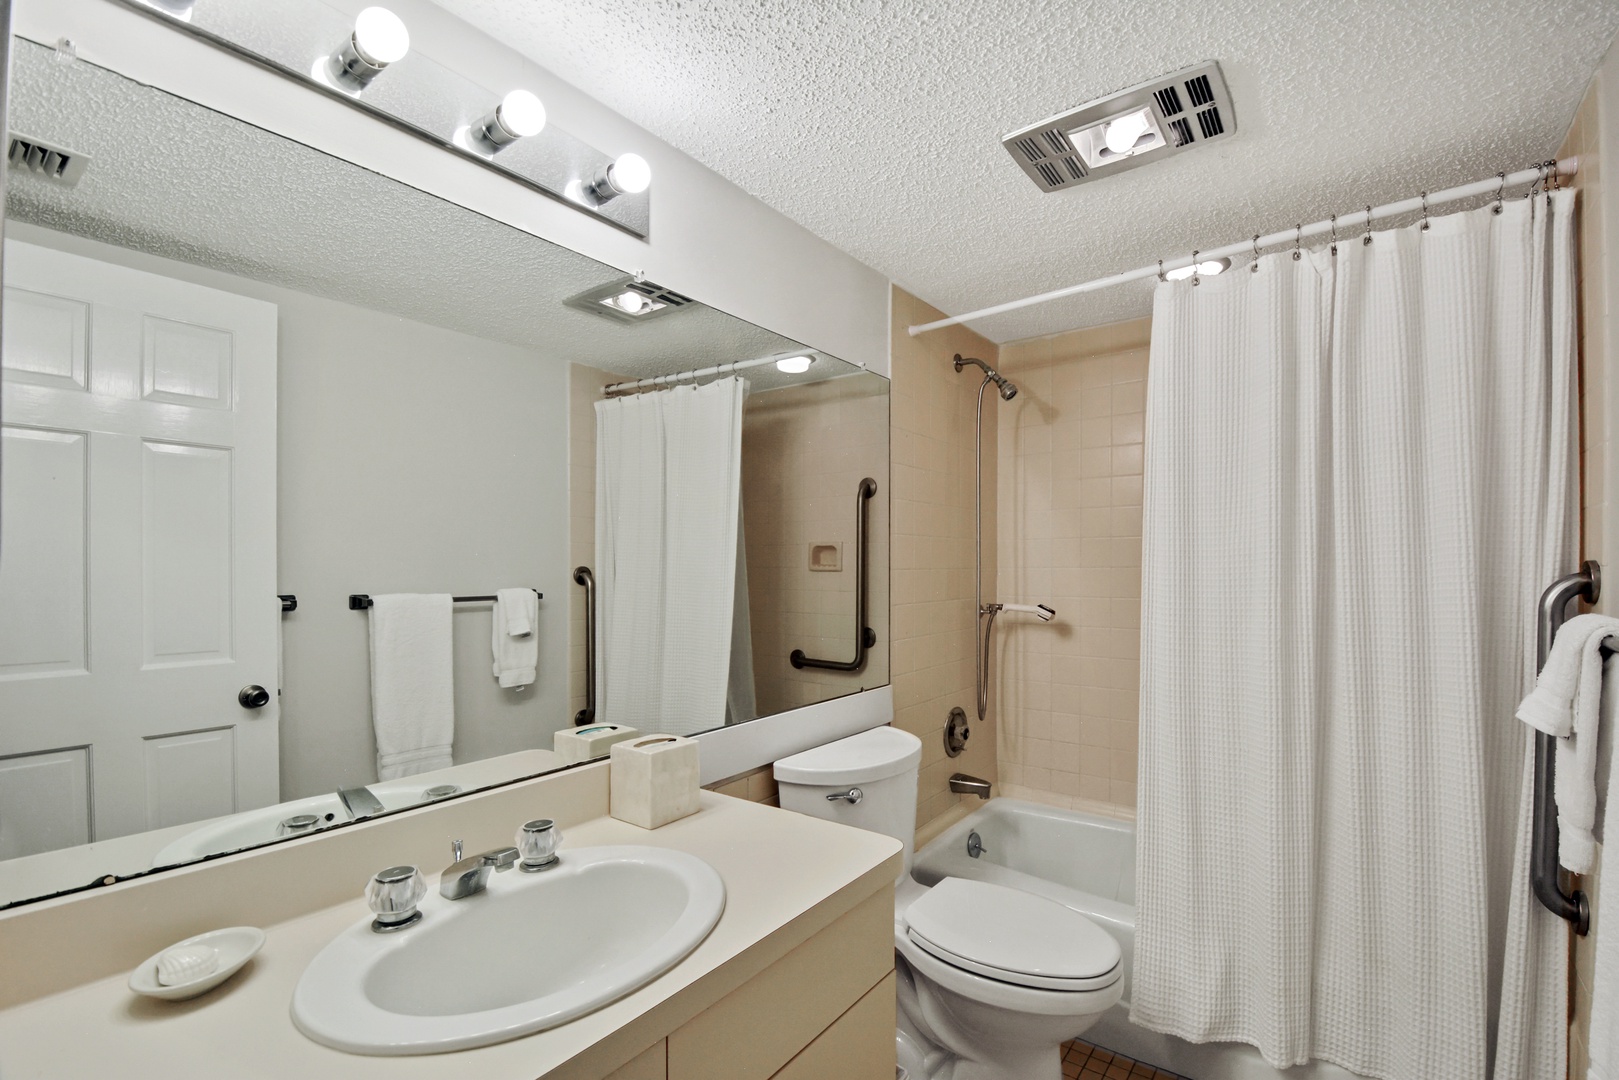 Guest Bathroom, Tub/Shower Combo